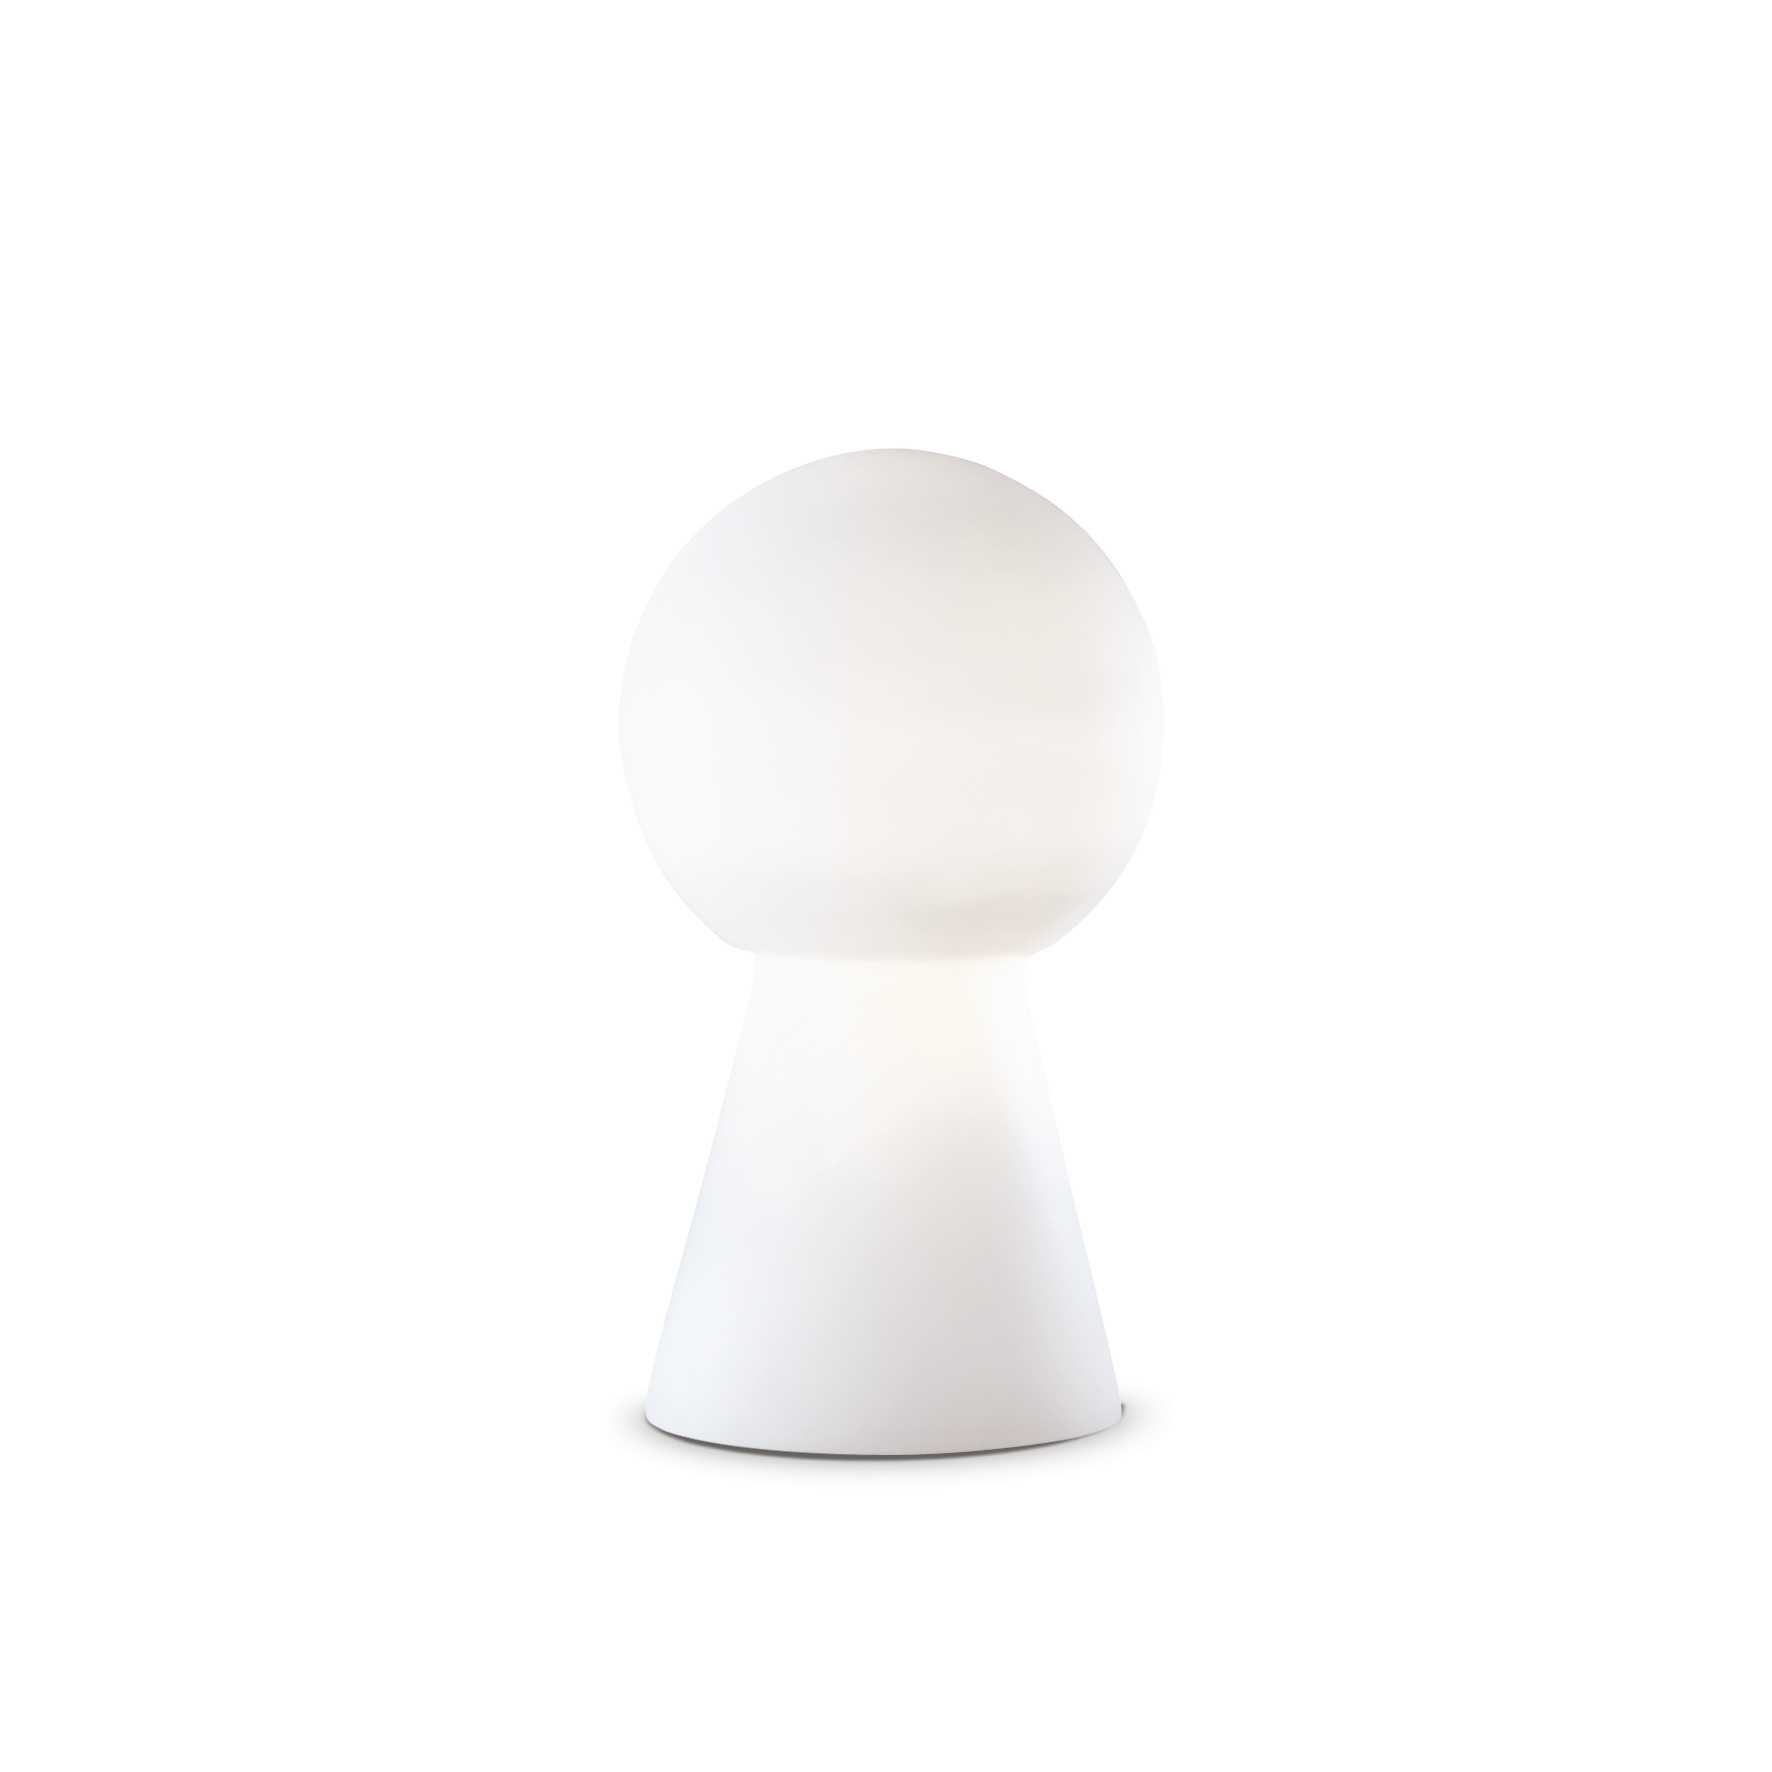 AD hotelska oprema Stolna lampa Birillo tl1(srednja)- Bijele boje slika proizvoda